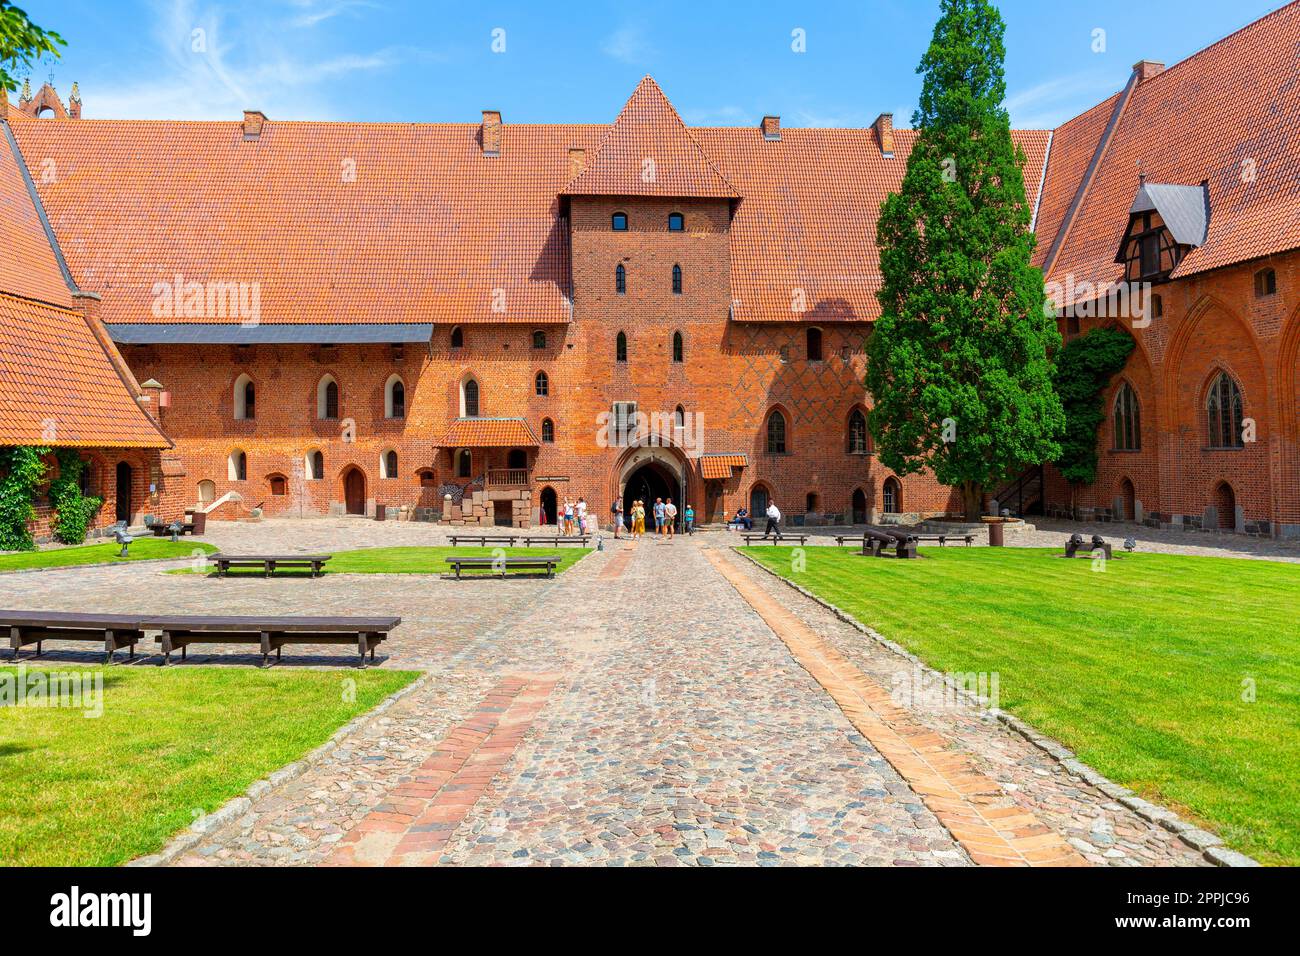 Courtyard of 13th century Malbork Castle, medieval Teutonic fortress on the Nogat River, Malbork, Poland Stock Photo